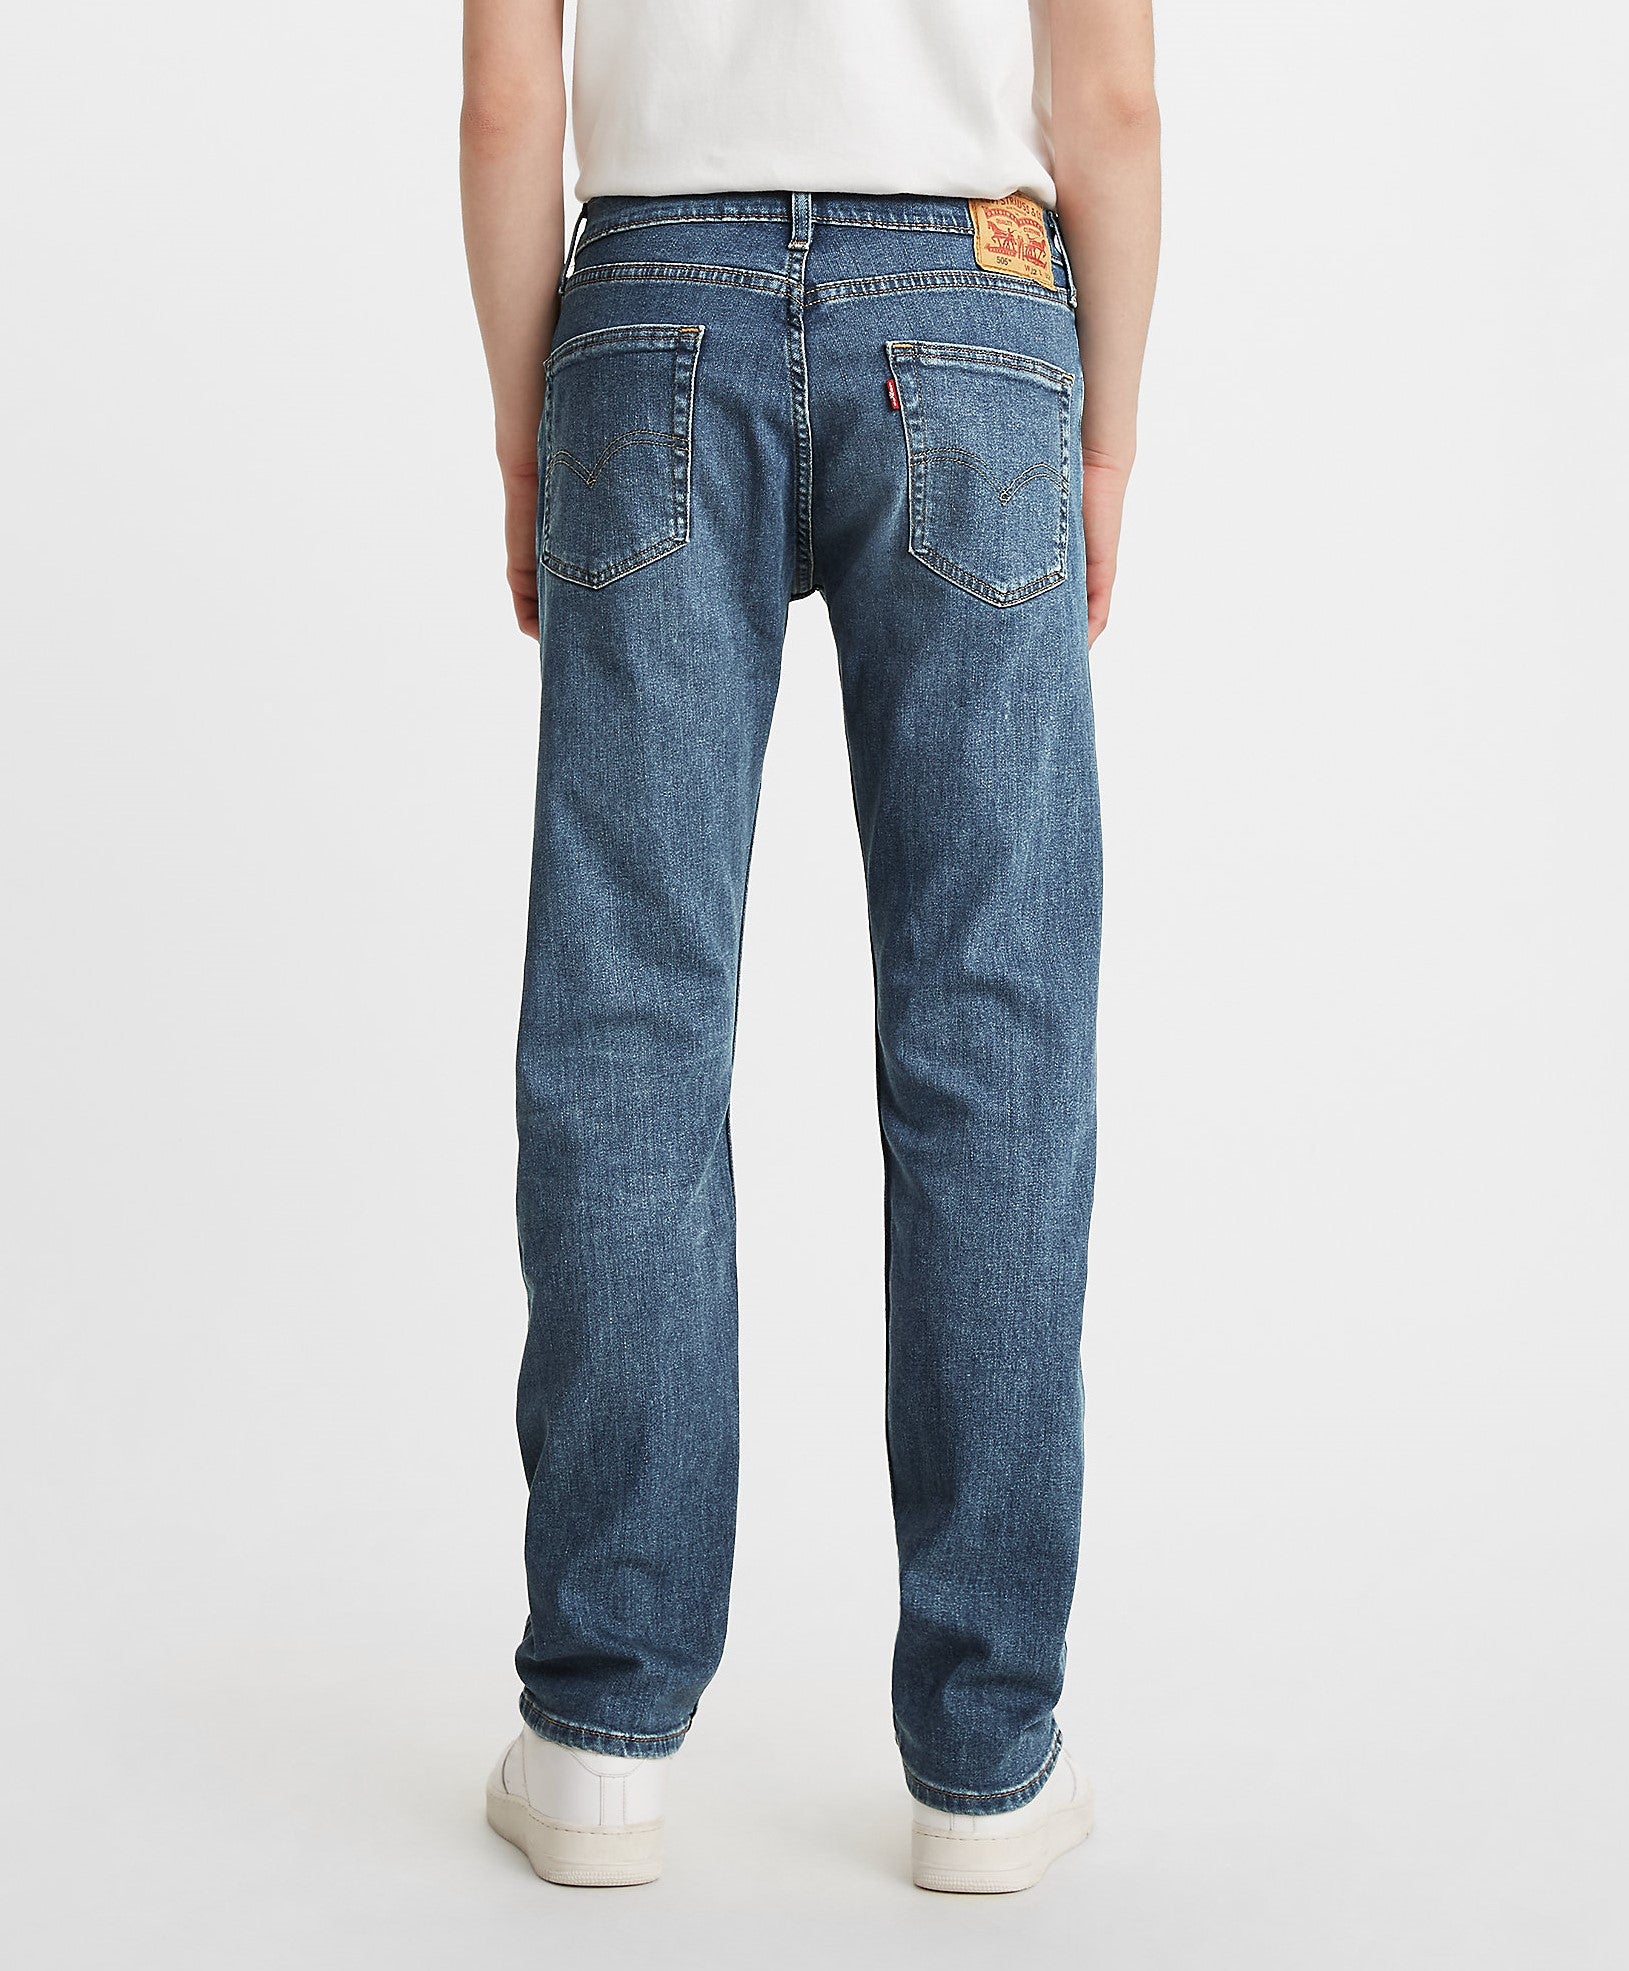 pantalon-jeans-levis-505-regular-p-caballeros-2